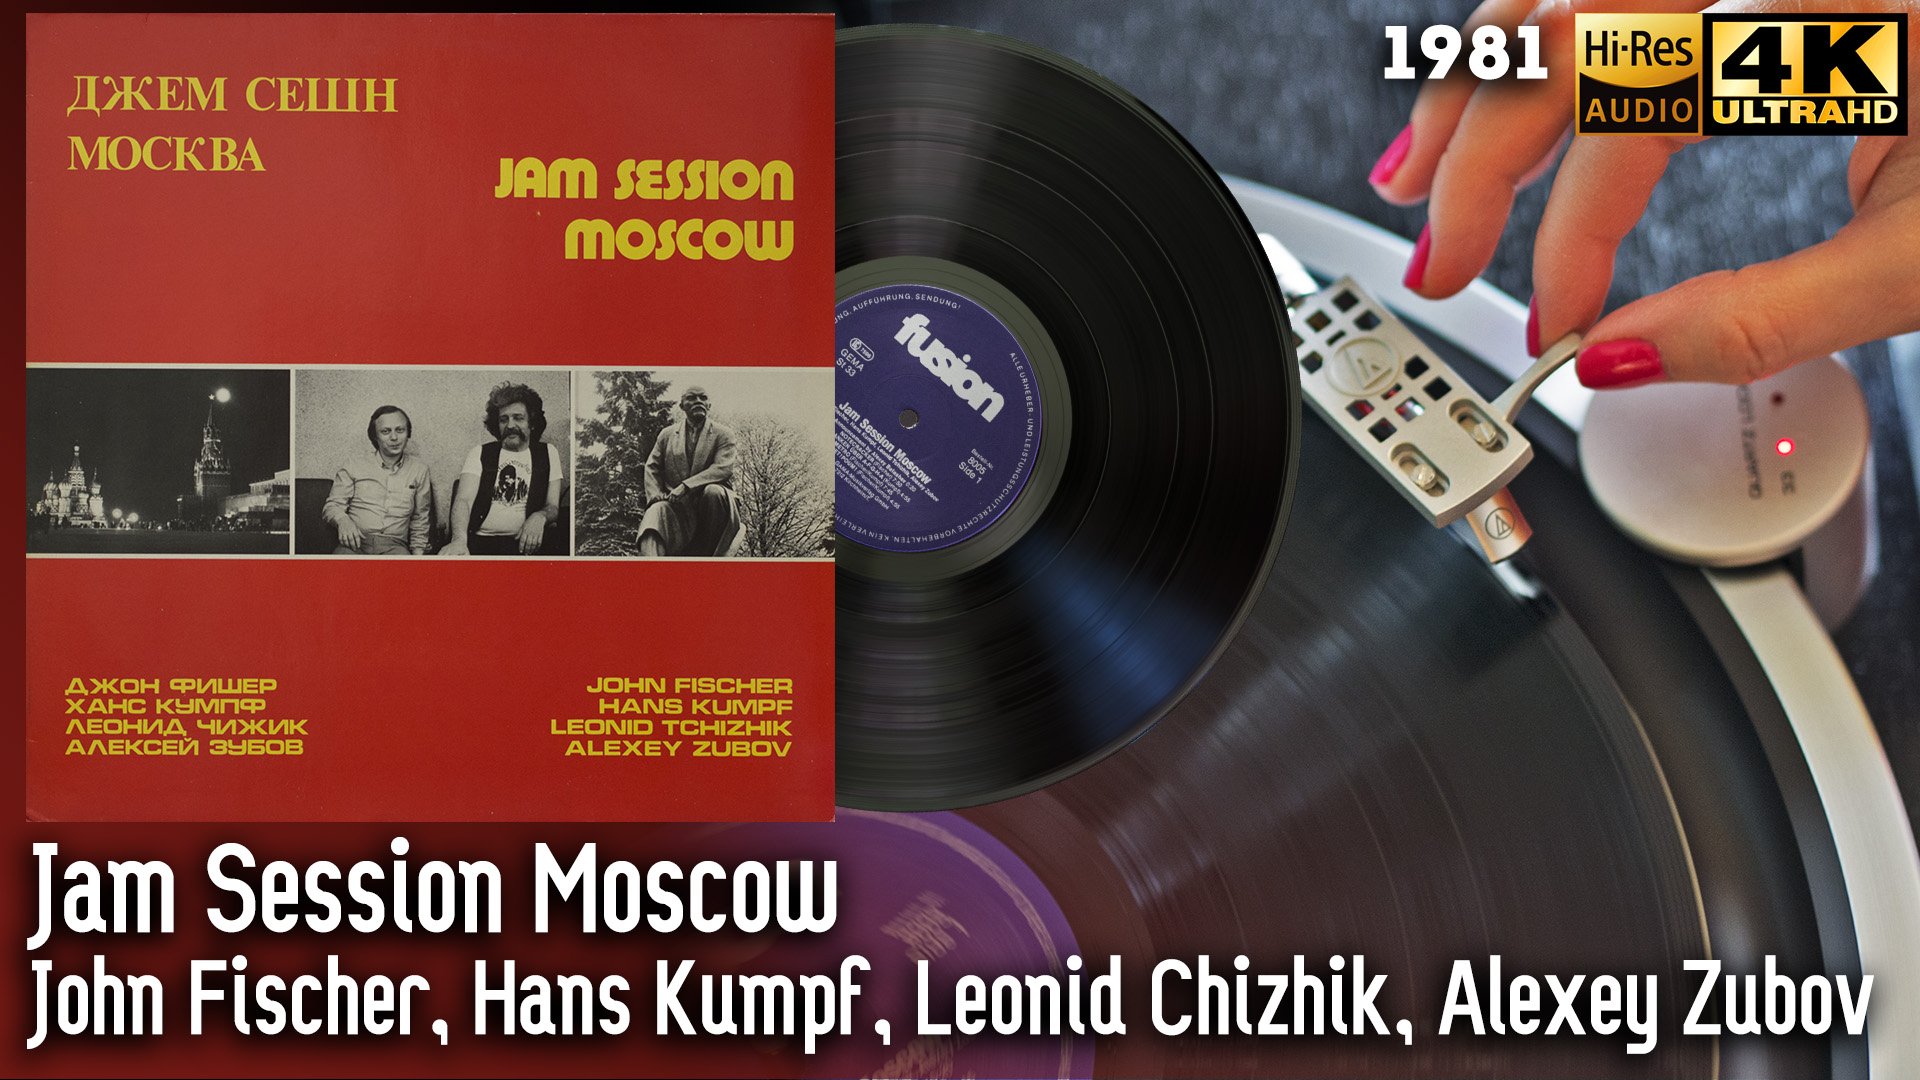 Jam Session Moscow - John Fischer, Hans Kumpf, Leonid Chizhik, Alexey Zubov, Vinyl 4K, 24bit/96kHz